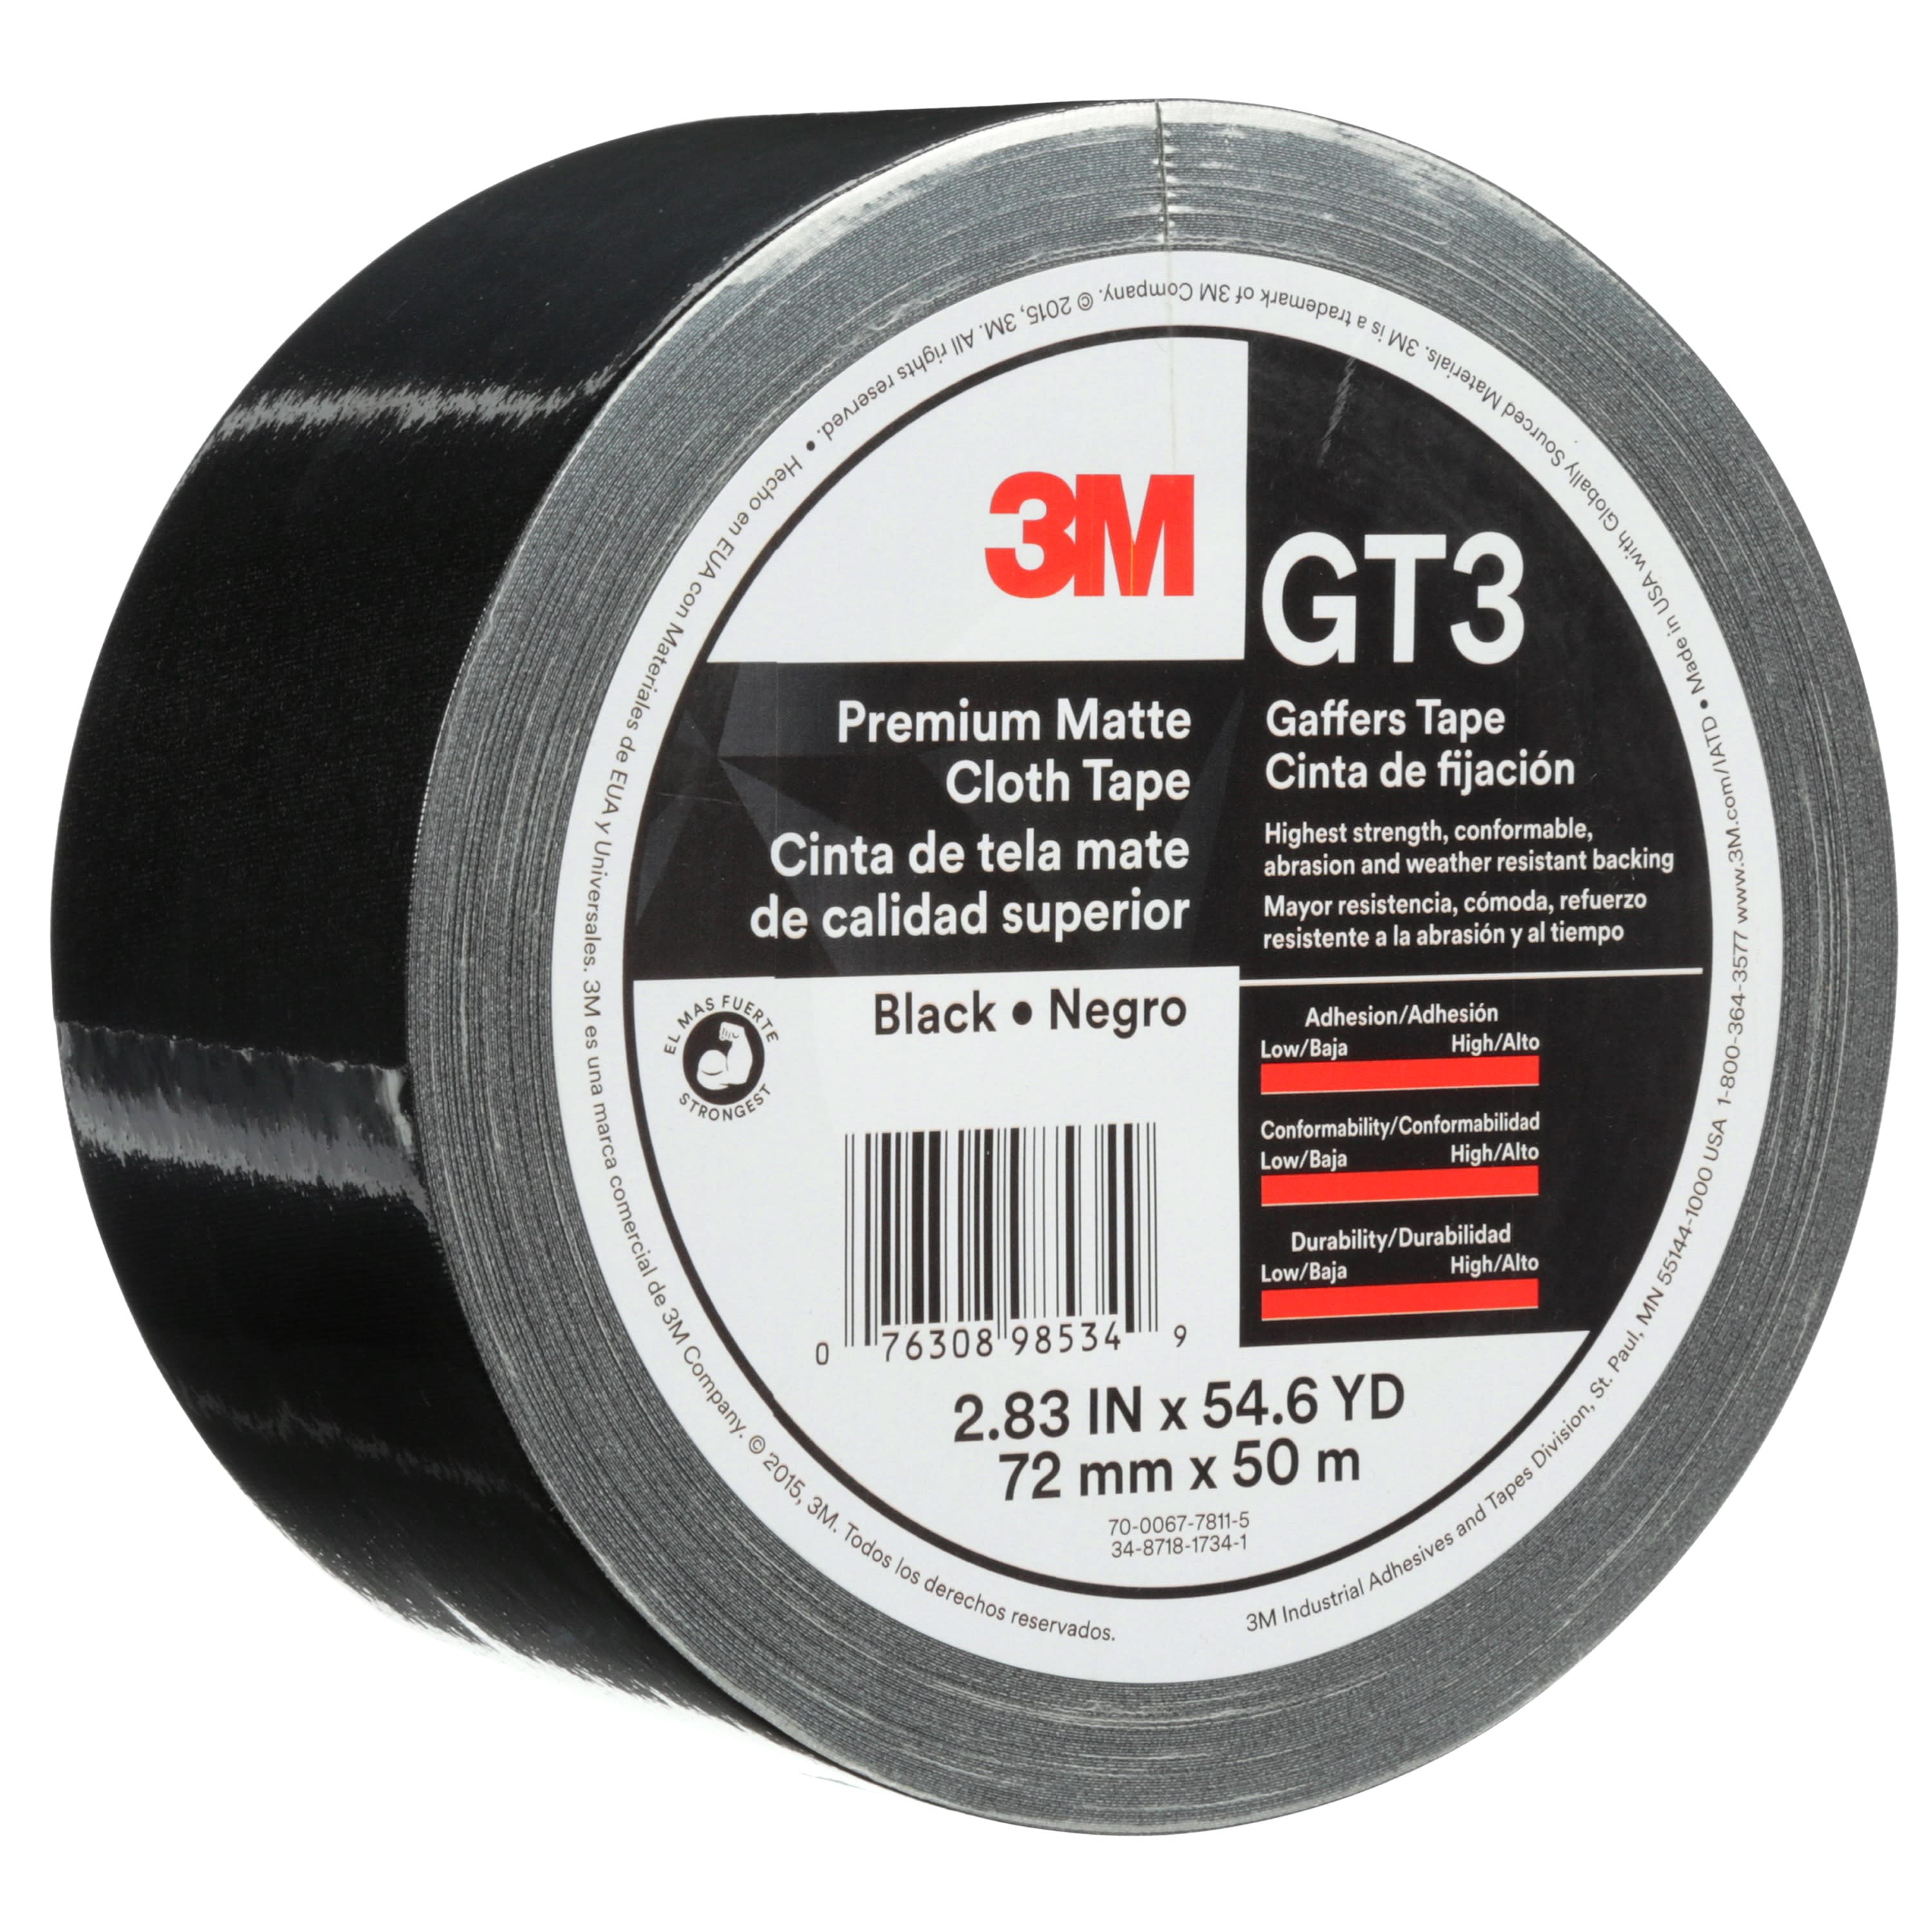 3M™ Premium Matte Cloth (Gaffers) Tape GT3, Black, 72 mm x 50 m, 11 mil,
16 per case